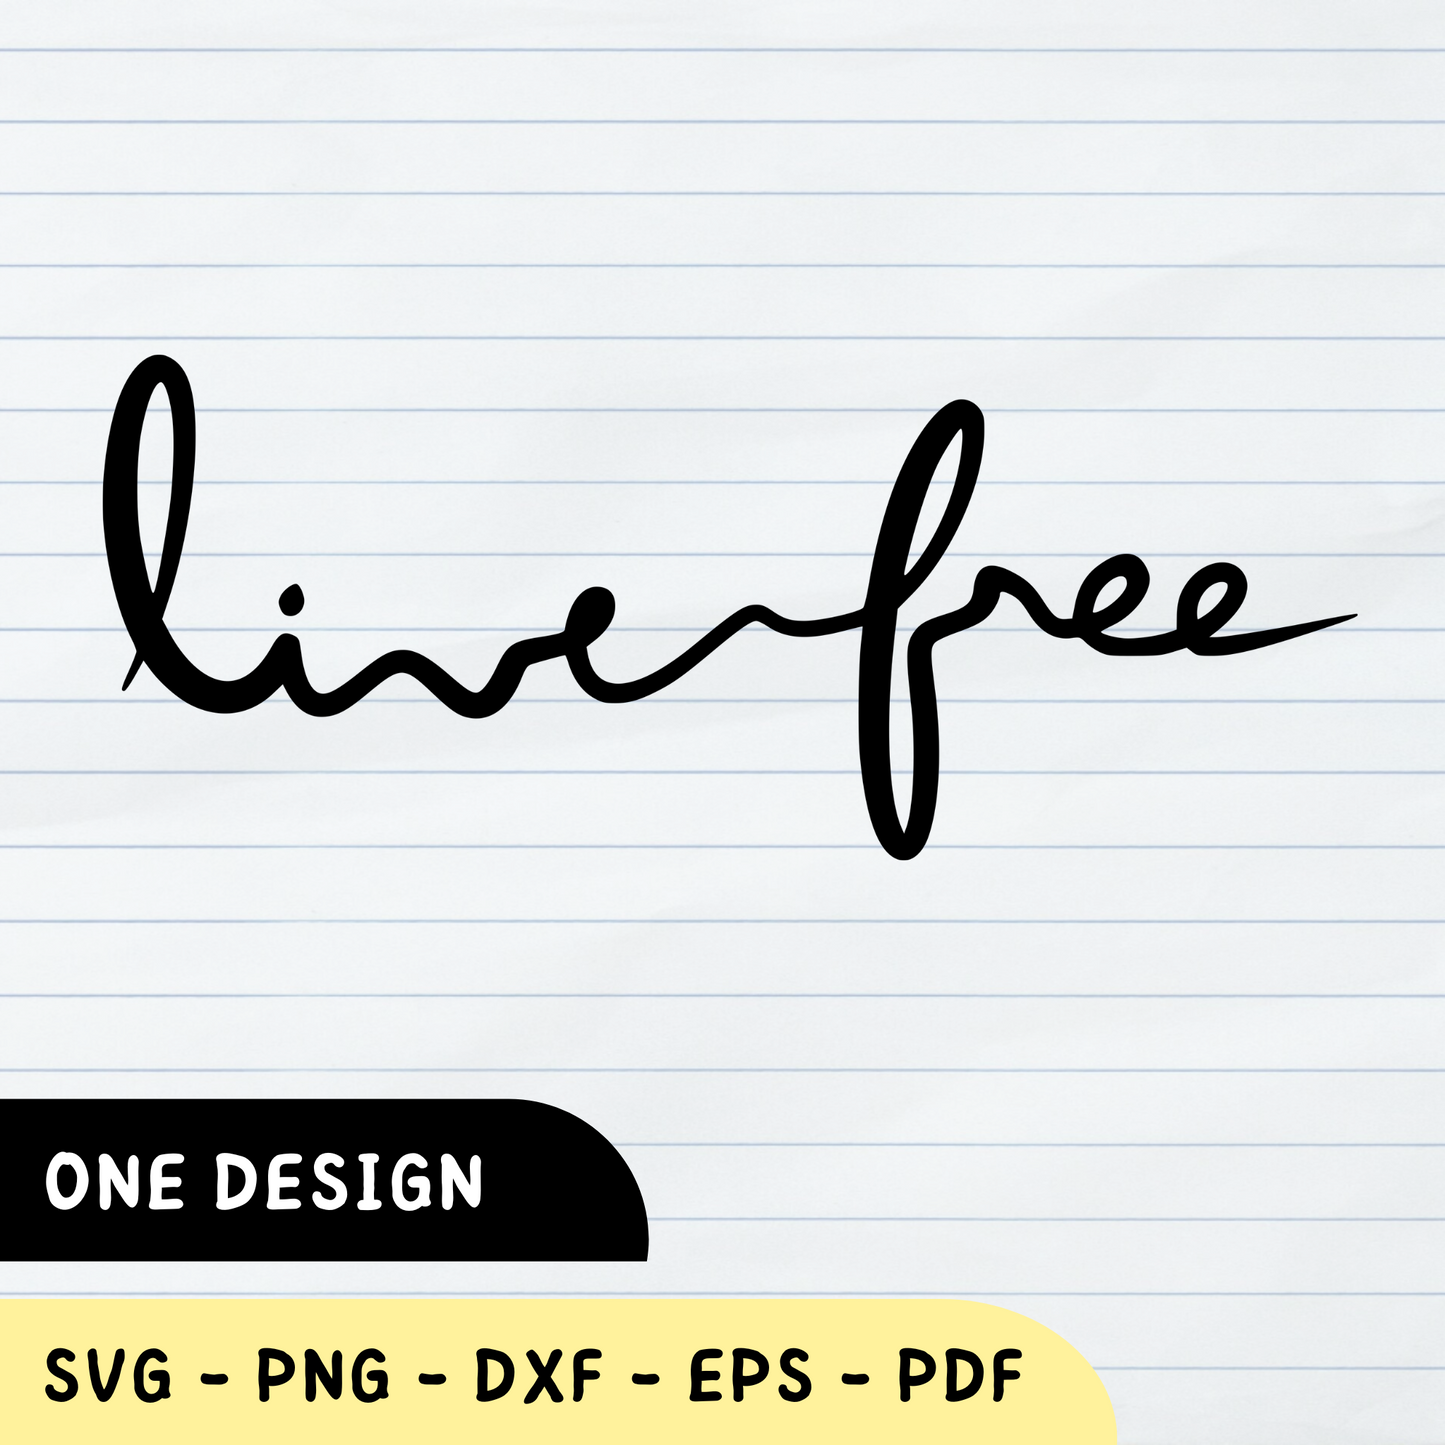 Live Free SVG, Live Free, Live Free design,Stylish writting SVG, Live Free Vector